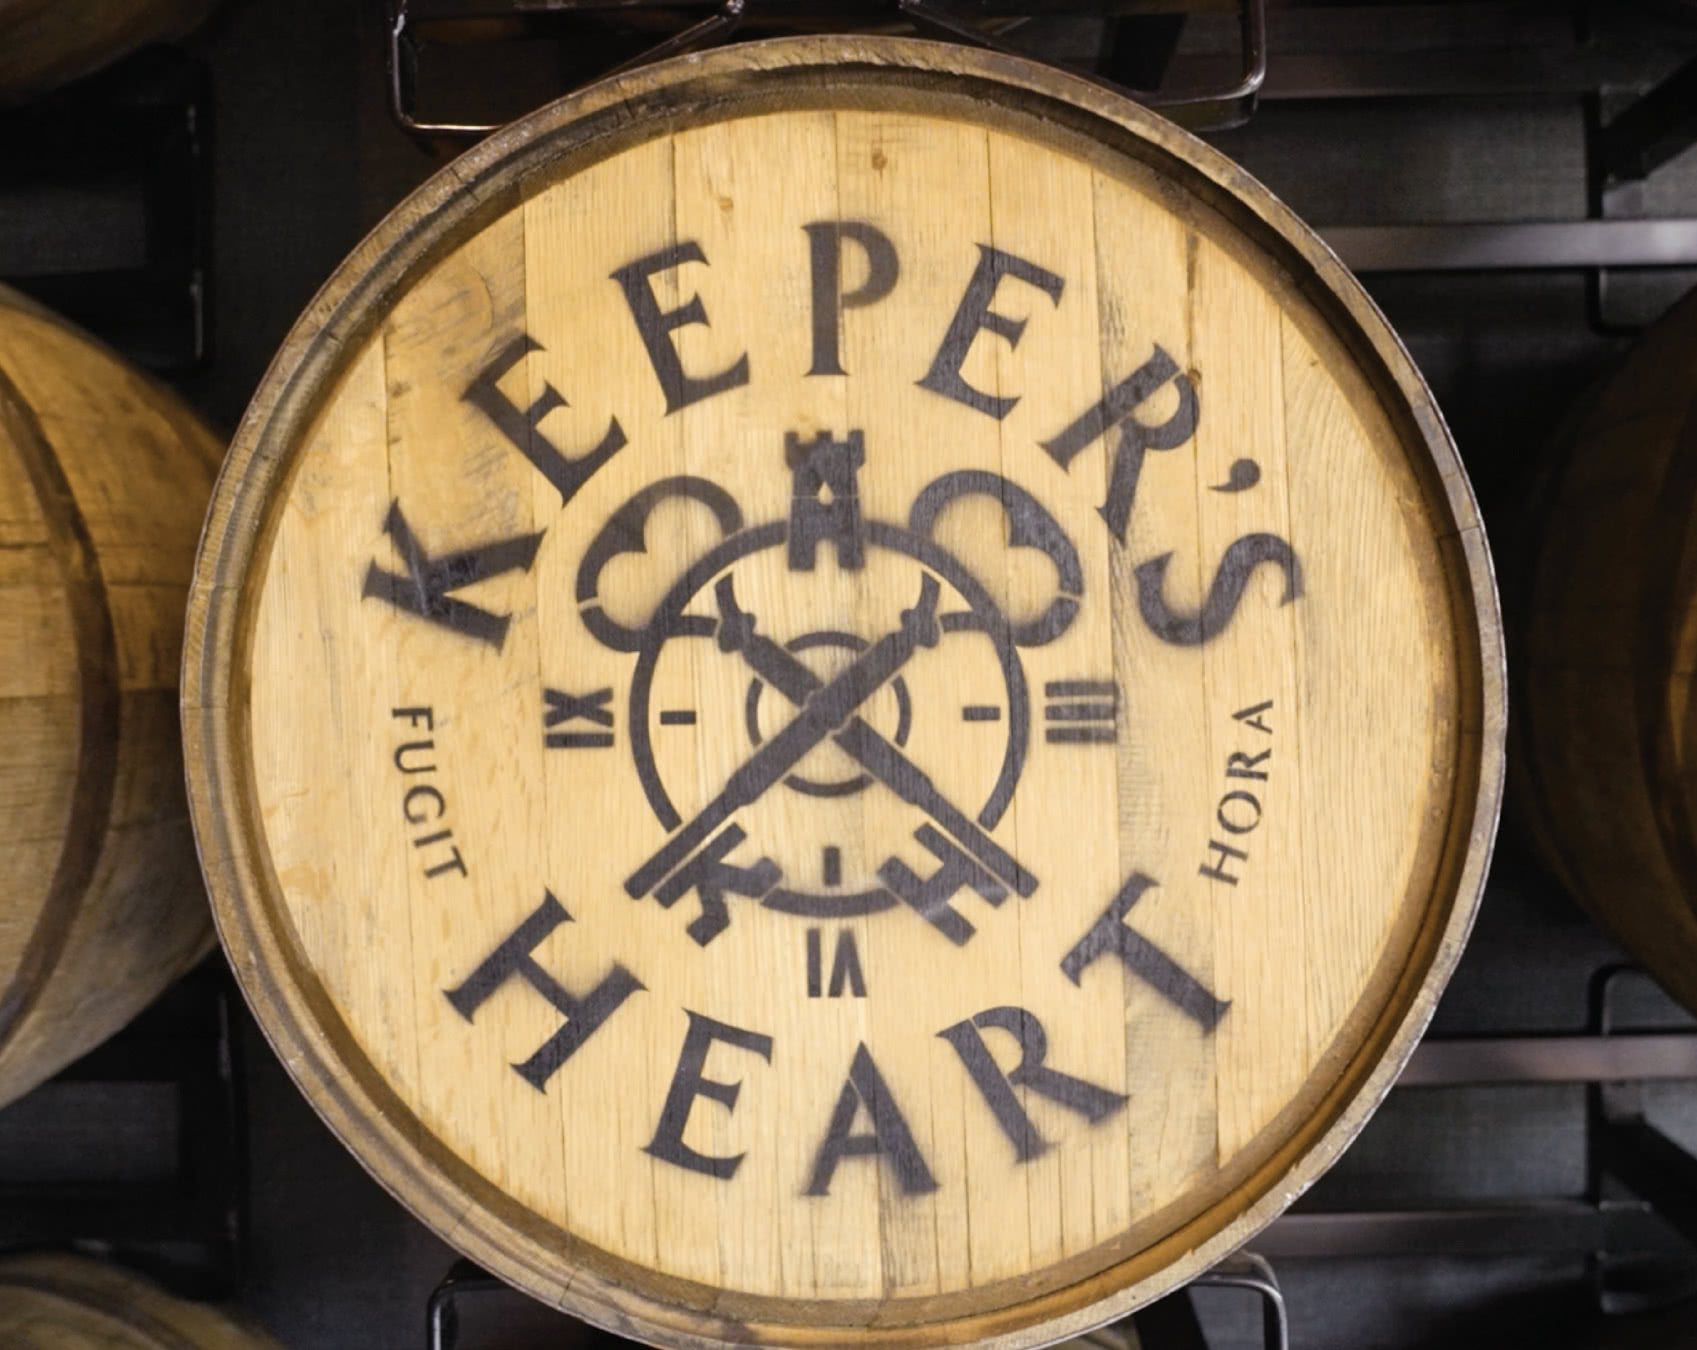 Keeper’s Heart custom spirits barrel end stamp